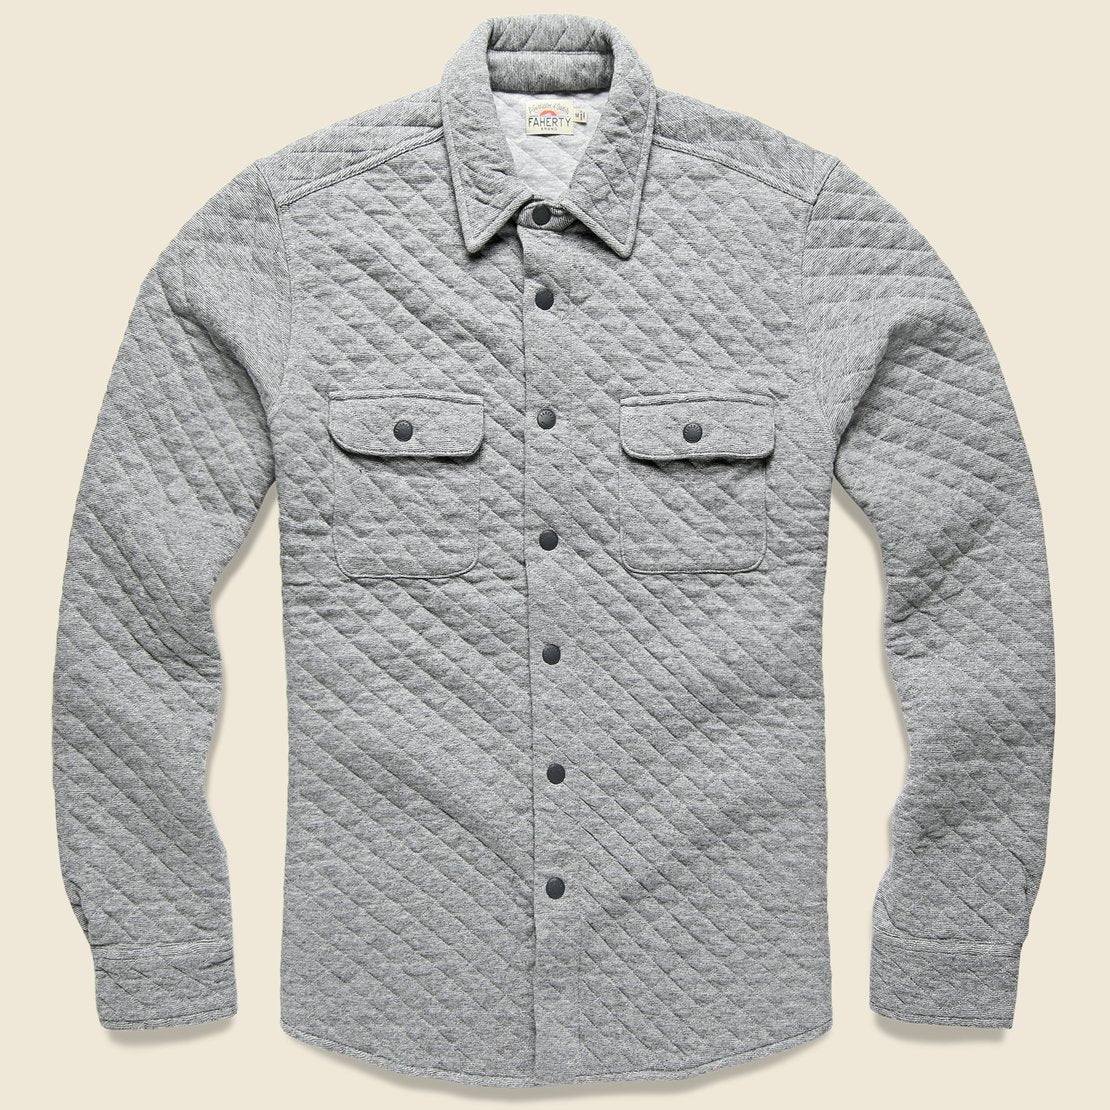 Faherty Quilted Belmar CPO Shirt Jacket - Grey Feeder Stripe